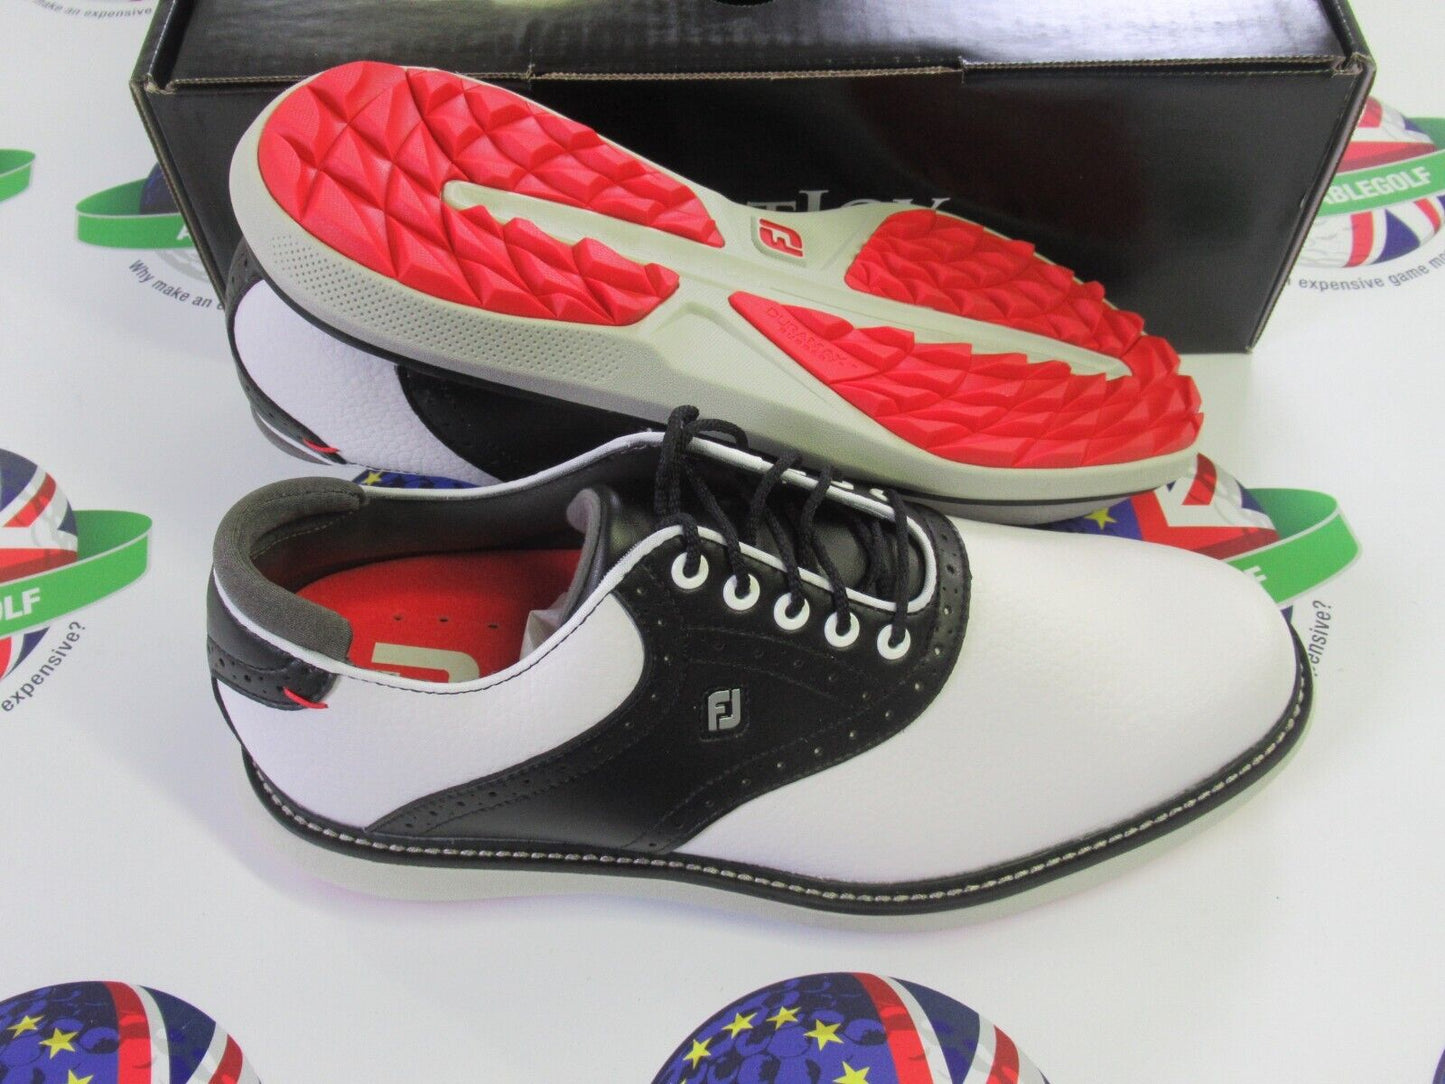 footjoy traditions waterproof golf shoes 57924k white/black uk size 10.5 medium